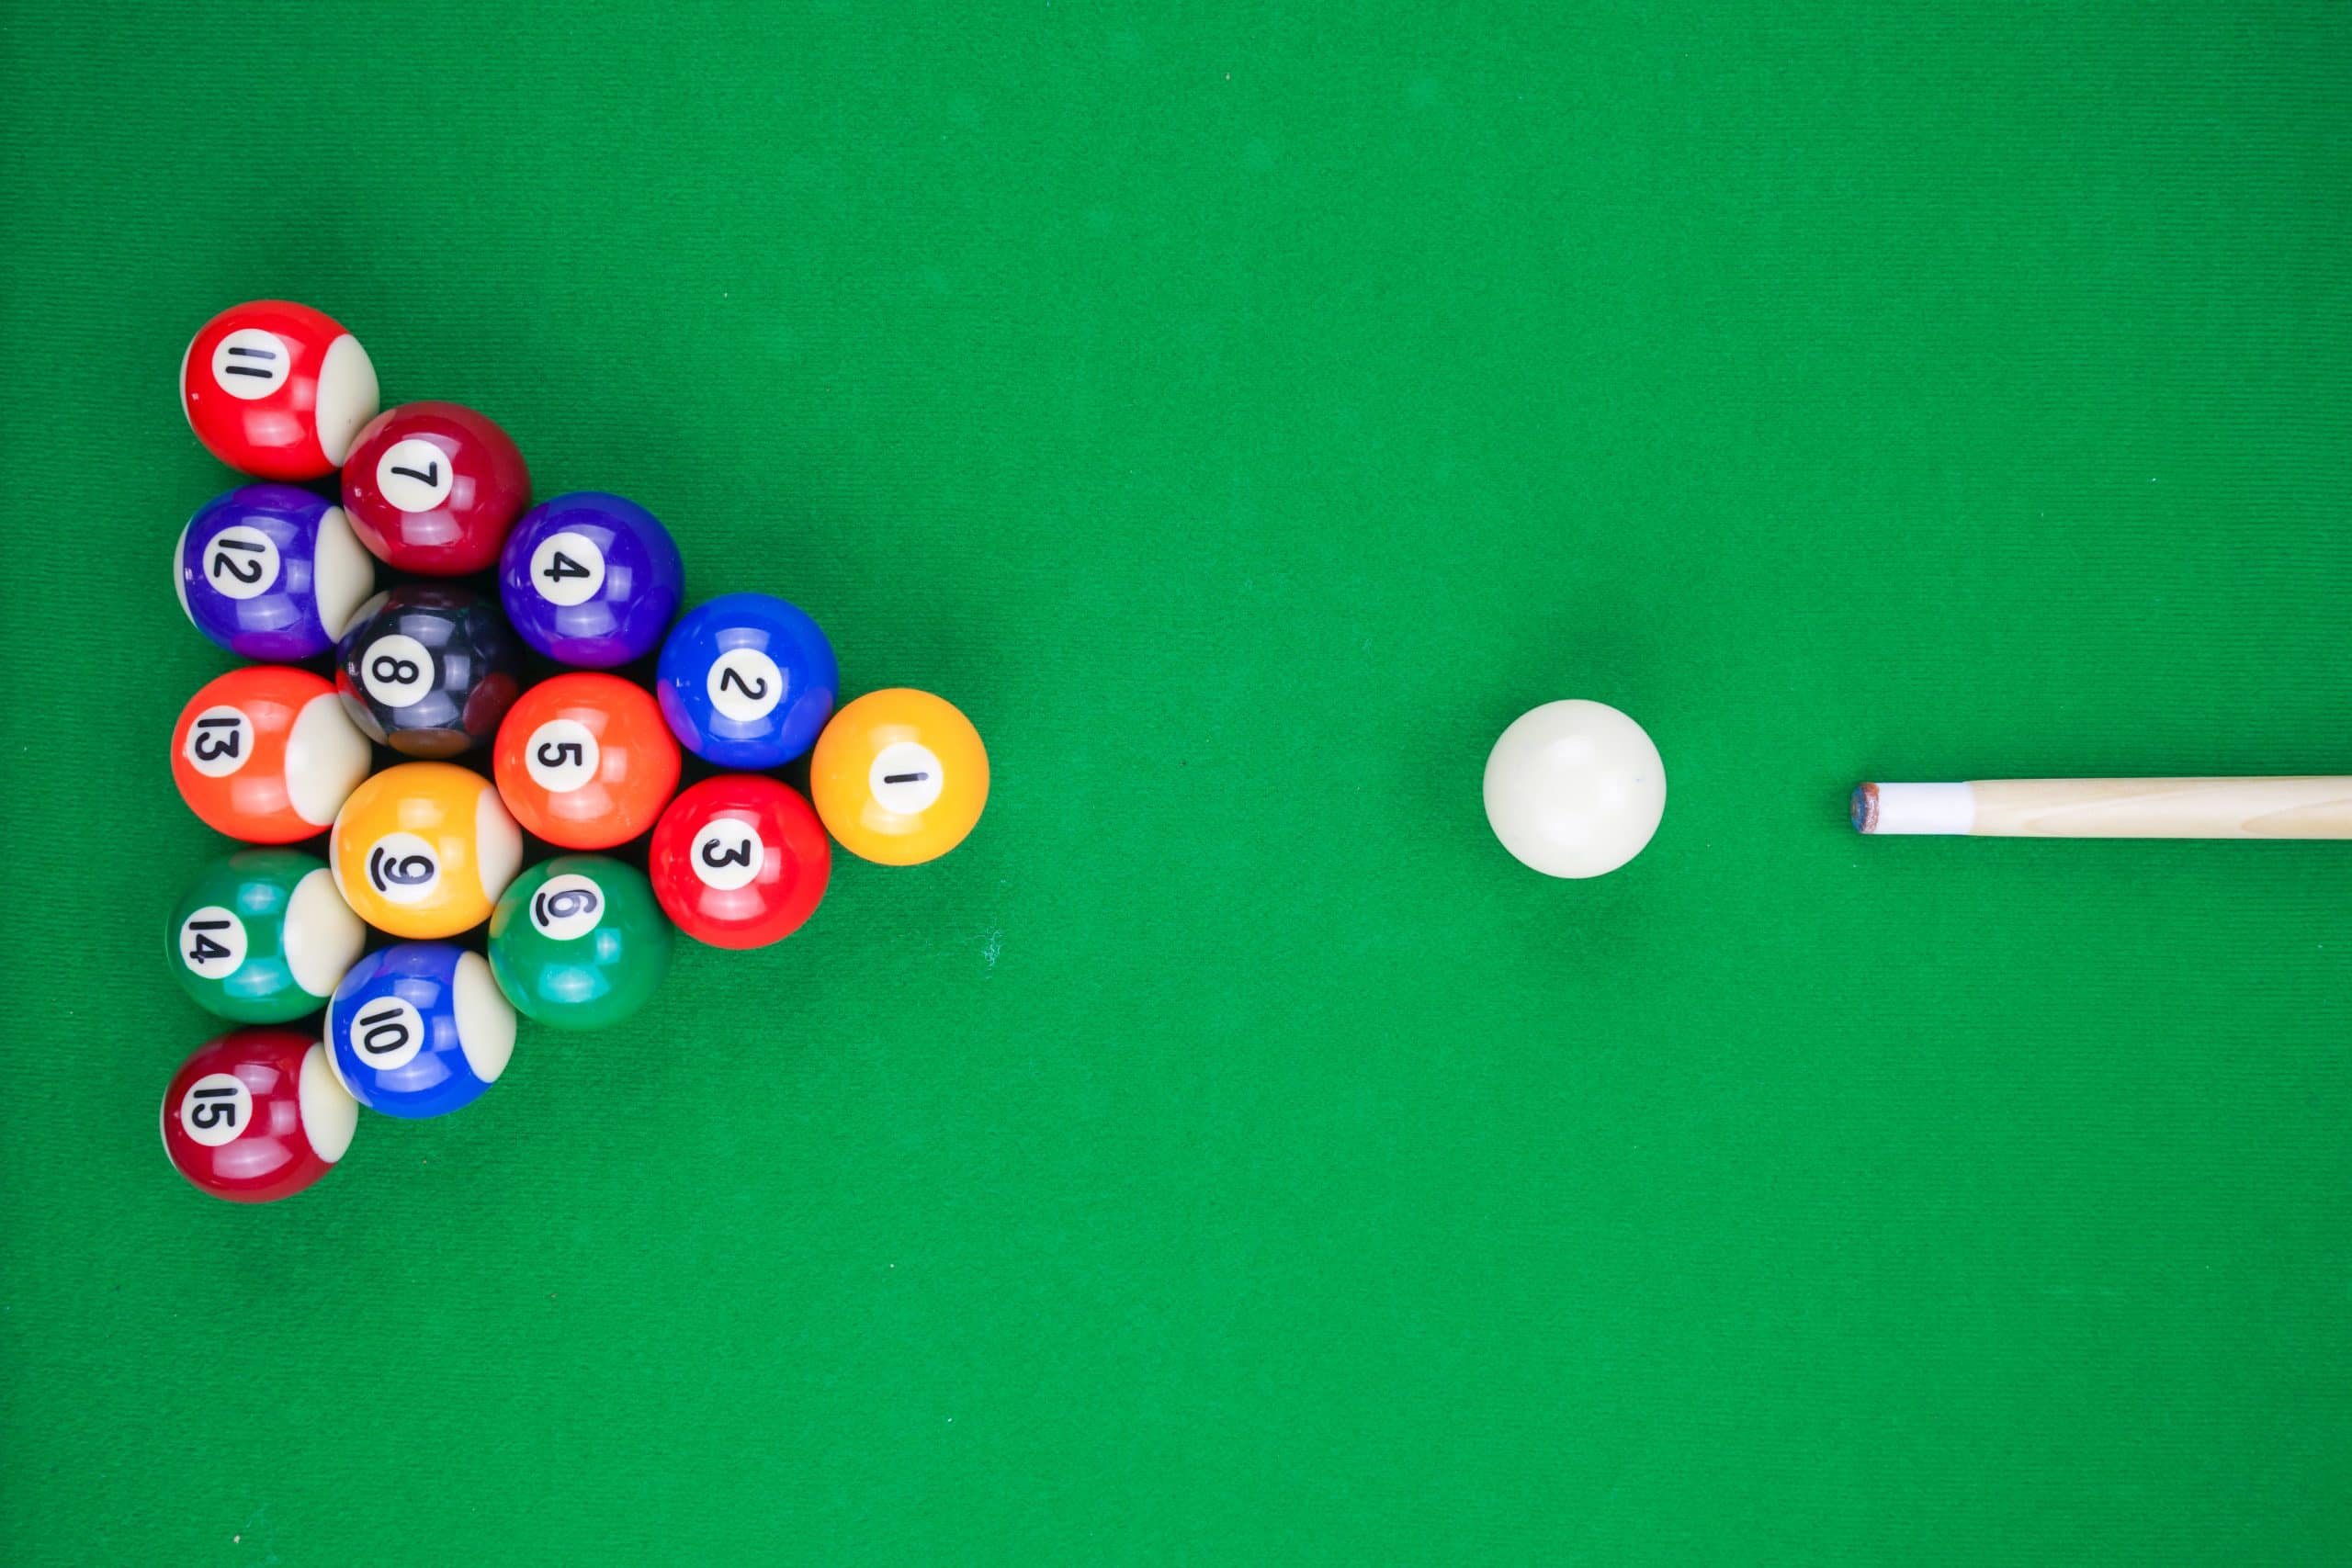 8 Ball Pool Game - ¡Todo lo que necesitas saber sobre este popular juego de mesa!